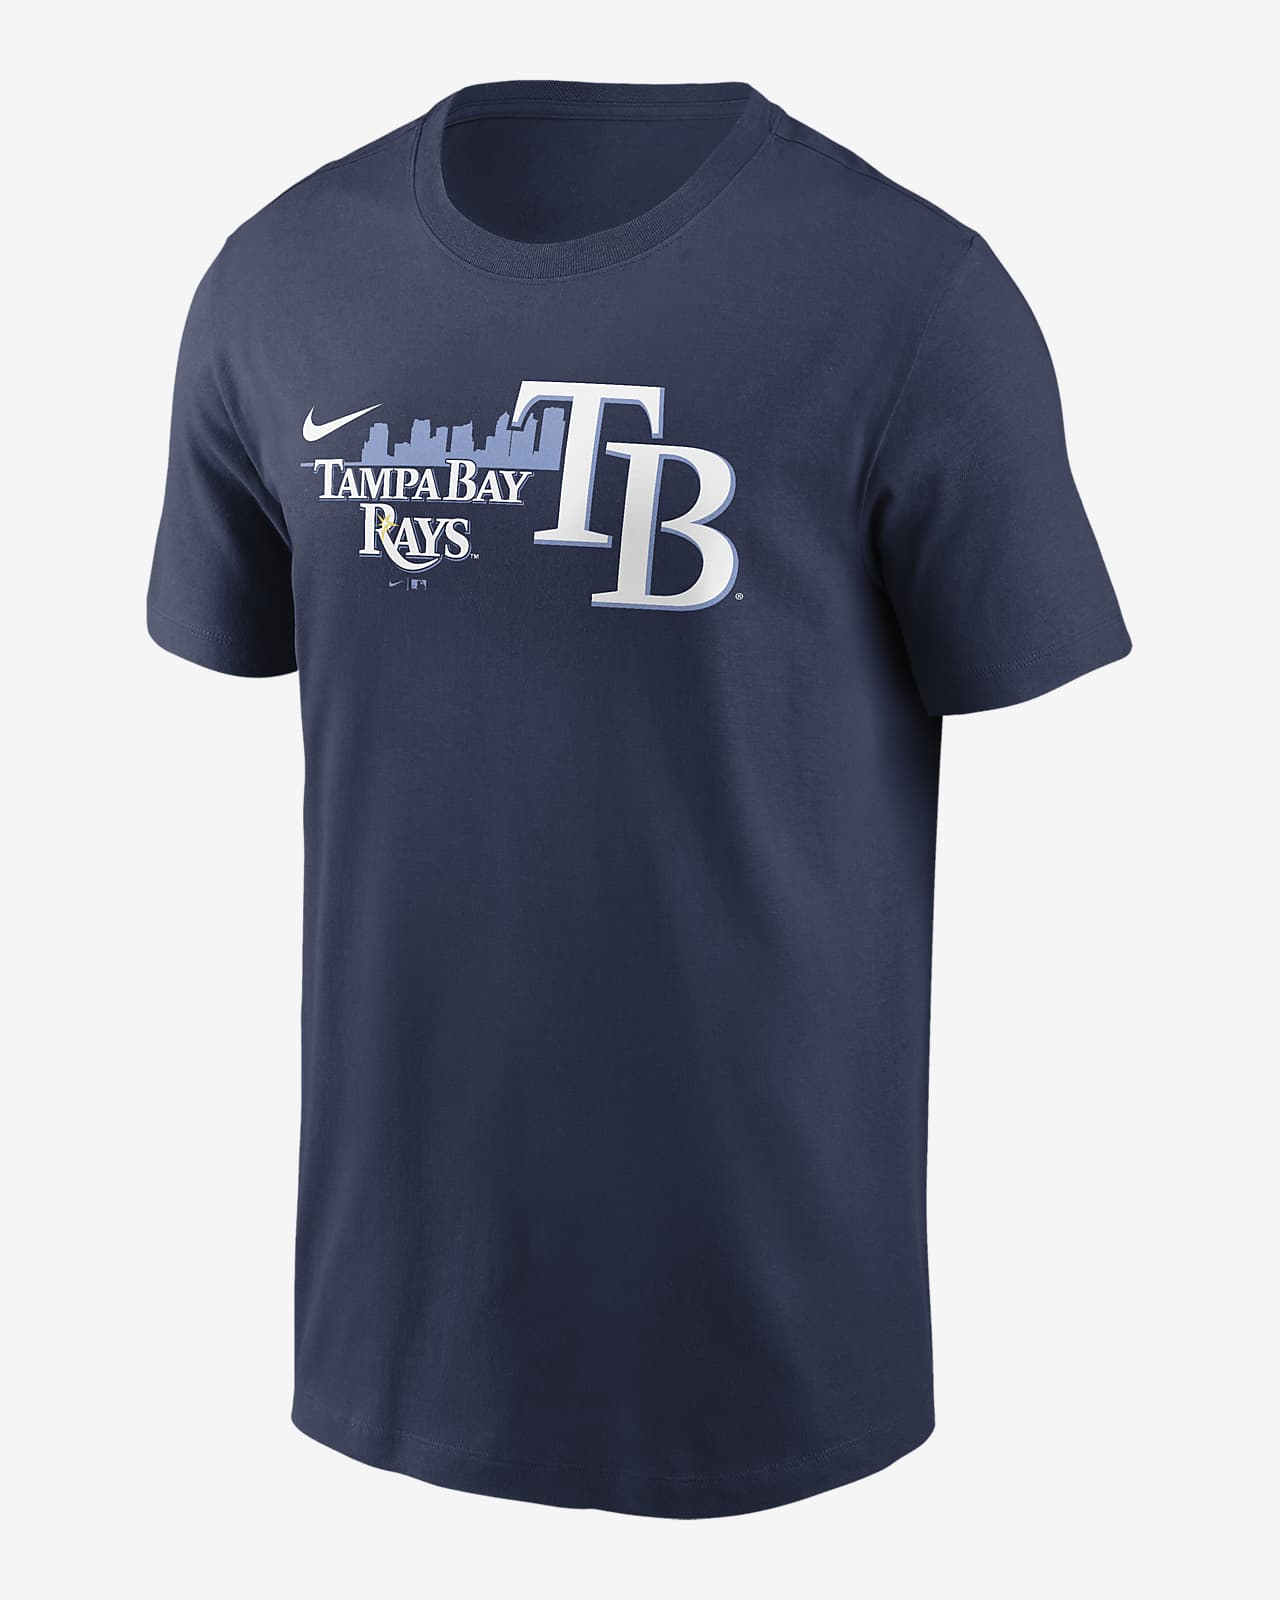 Tampa Bay Rays Local Team Phrase Men's Nike MLB T-Shirt.